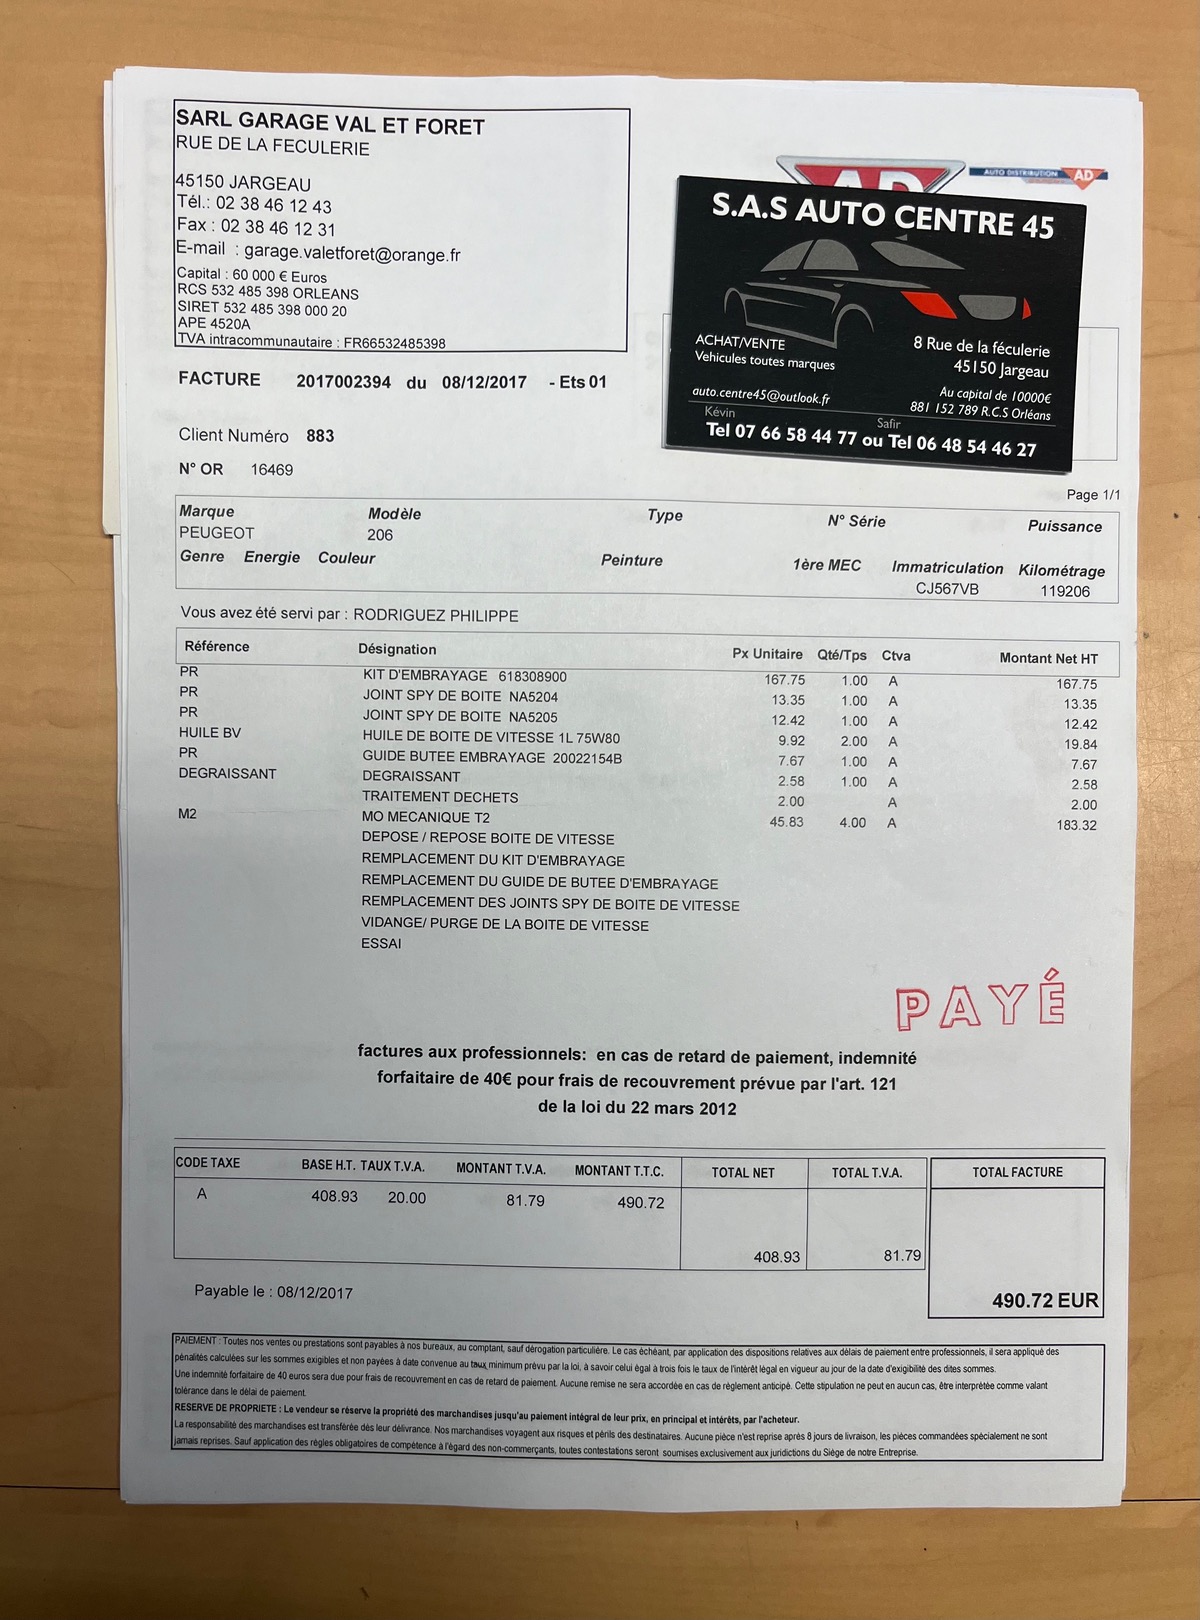 Peugeot 206 SW 1.4 75 CV EMBRAYAGE / DISTRIBUTION OK